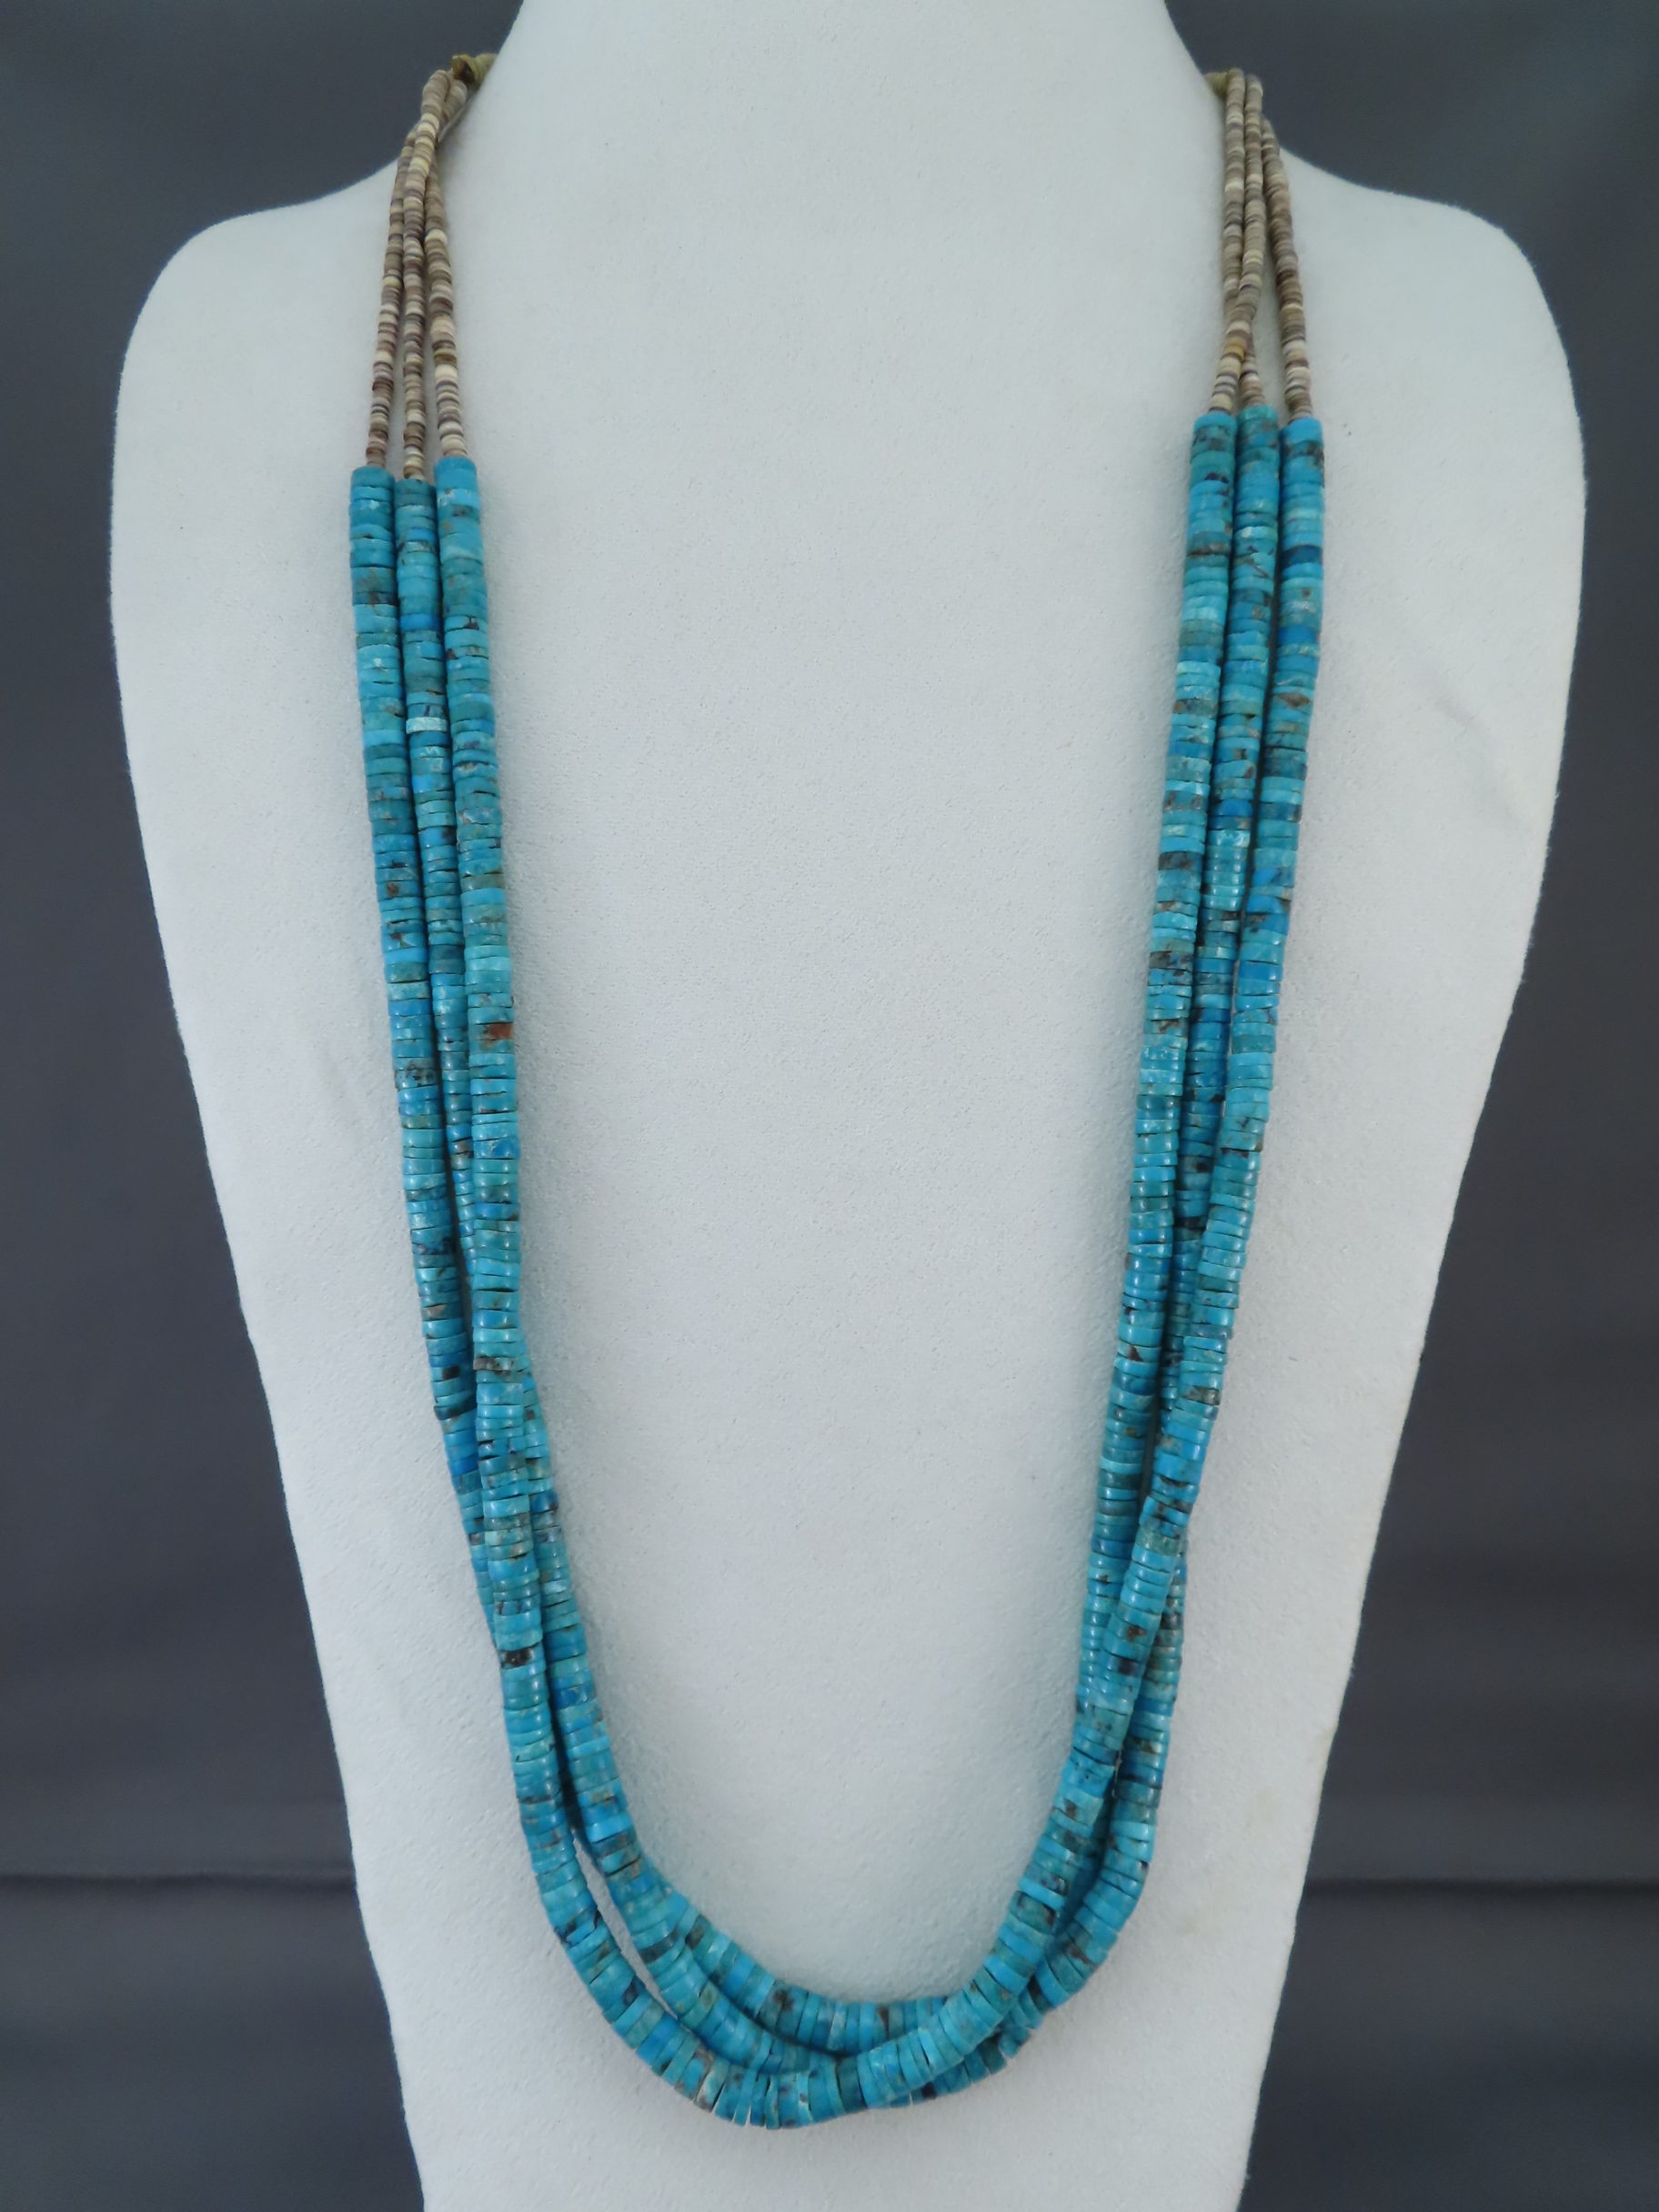 Three Strand Sleeping Beauty Turquoise Necklace by Santo Domingo Pueblo Indian jewelry artist, Lita Atencio FOR SALE $995-